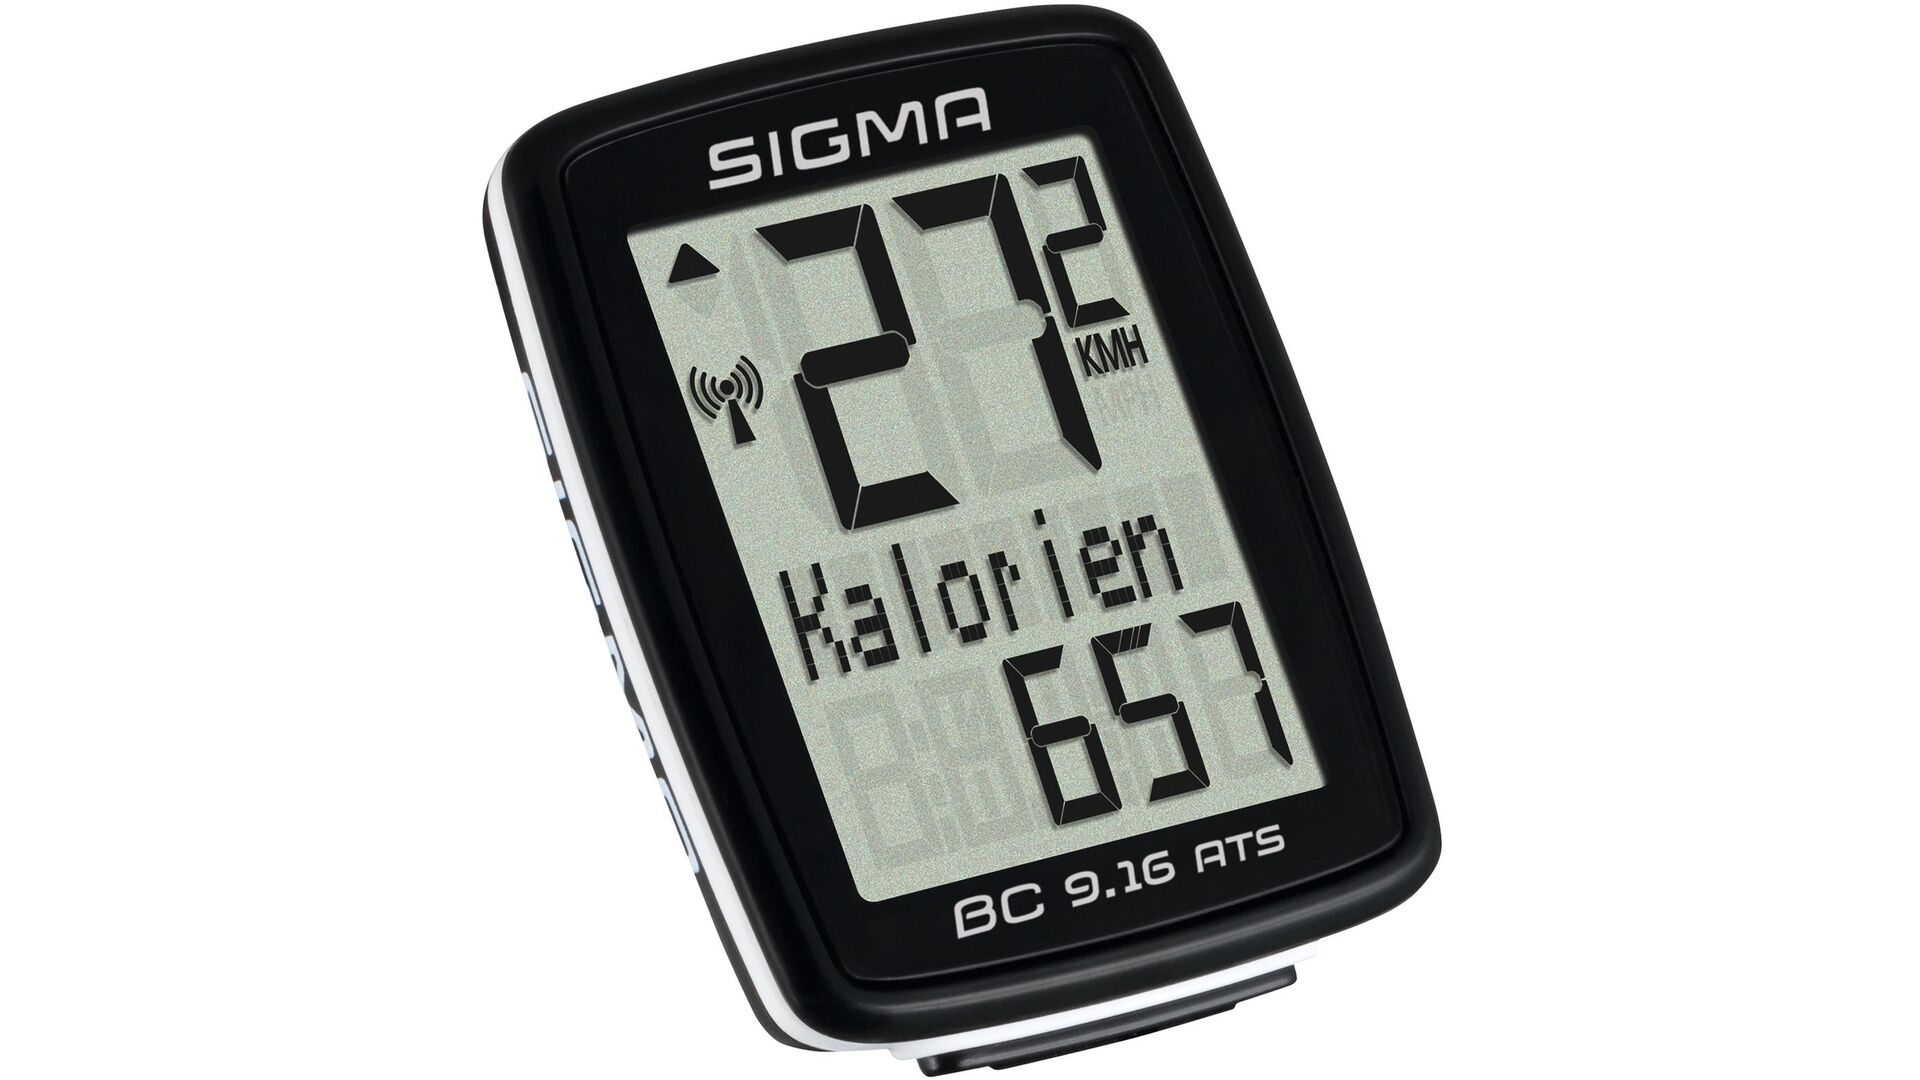 Sigma Sport Fahrradcomputer Topline BC 9.16